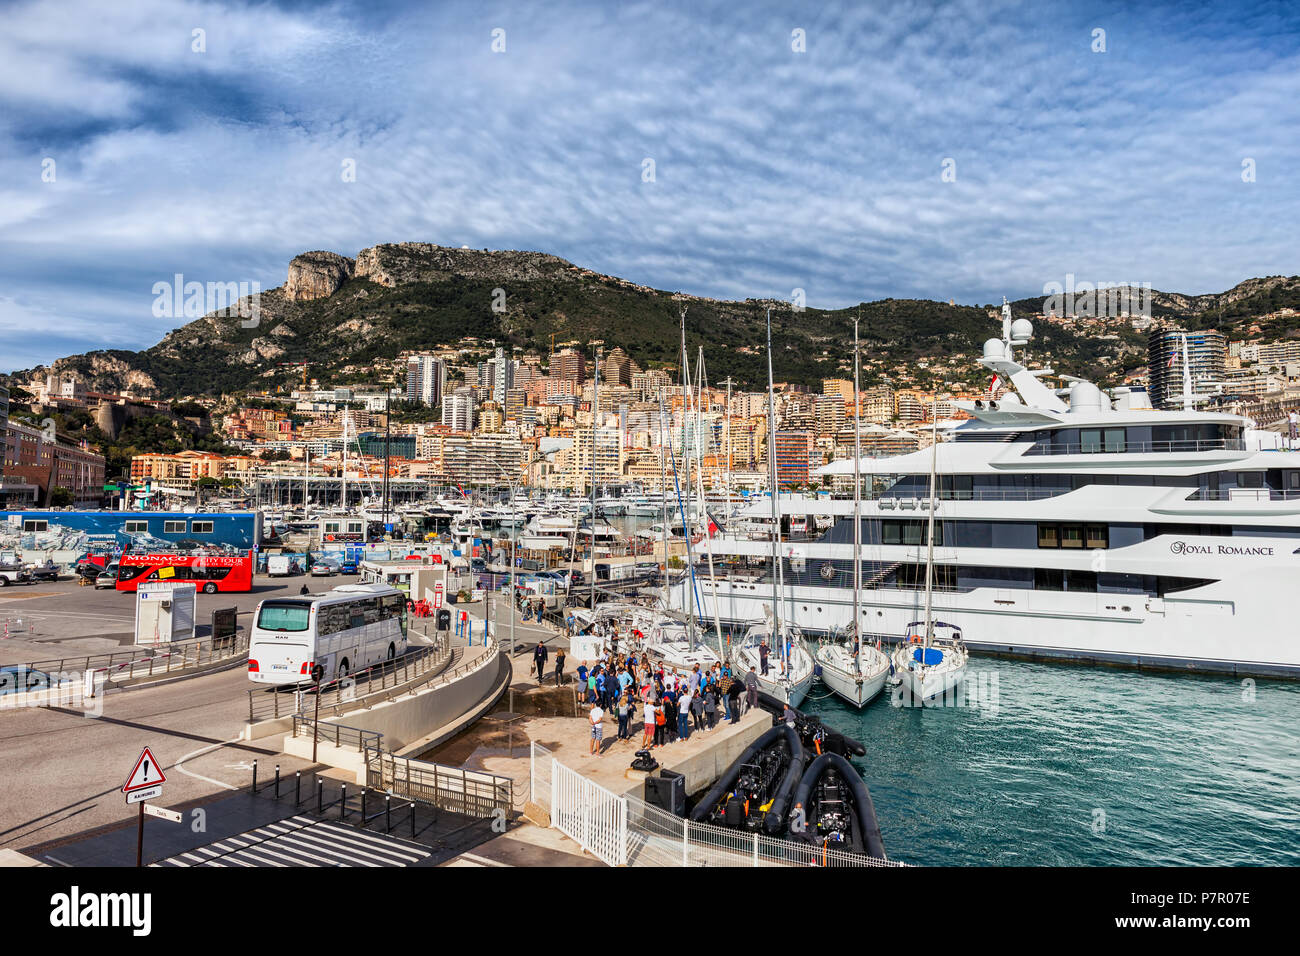 Principality of Monaco quay, yacht and sailing boats at Port Hercule on Mediterranean Sea, Europe Stock Photo